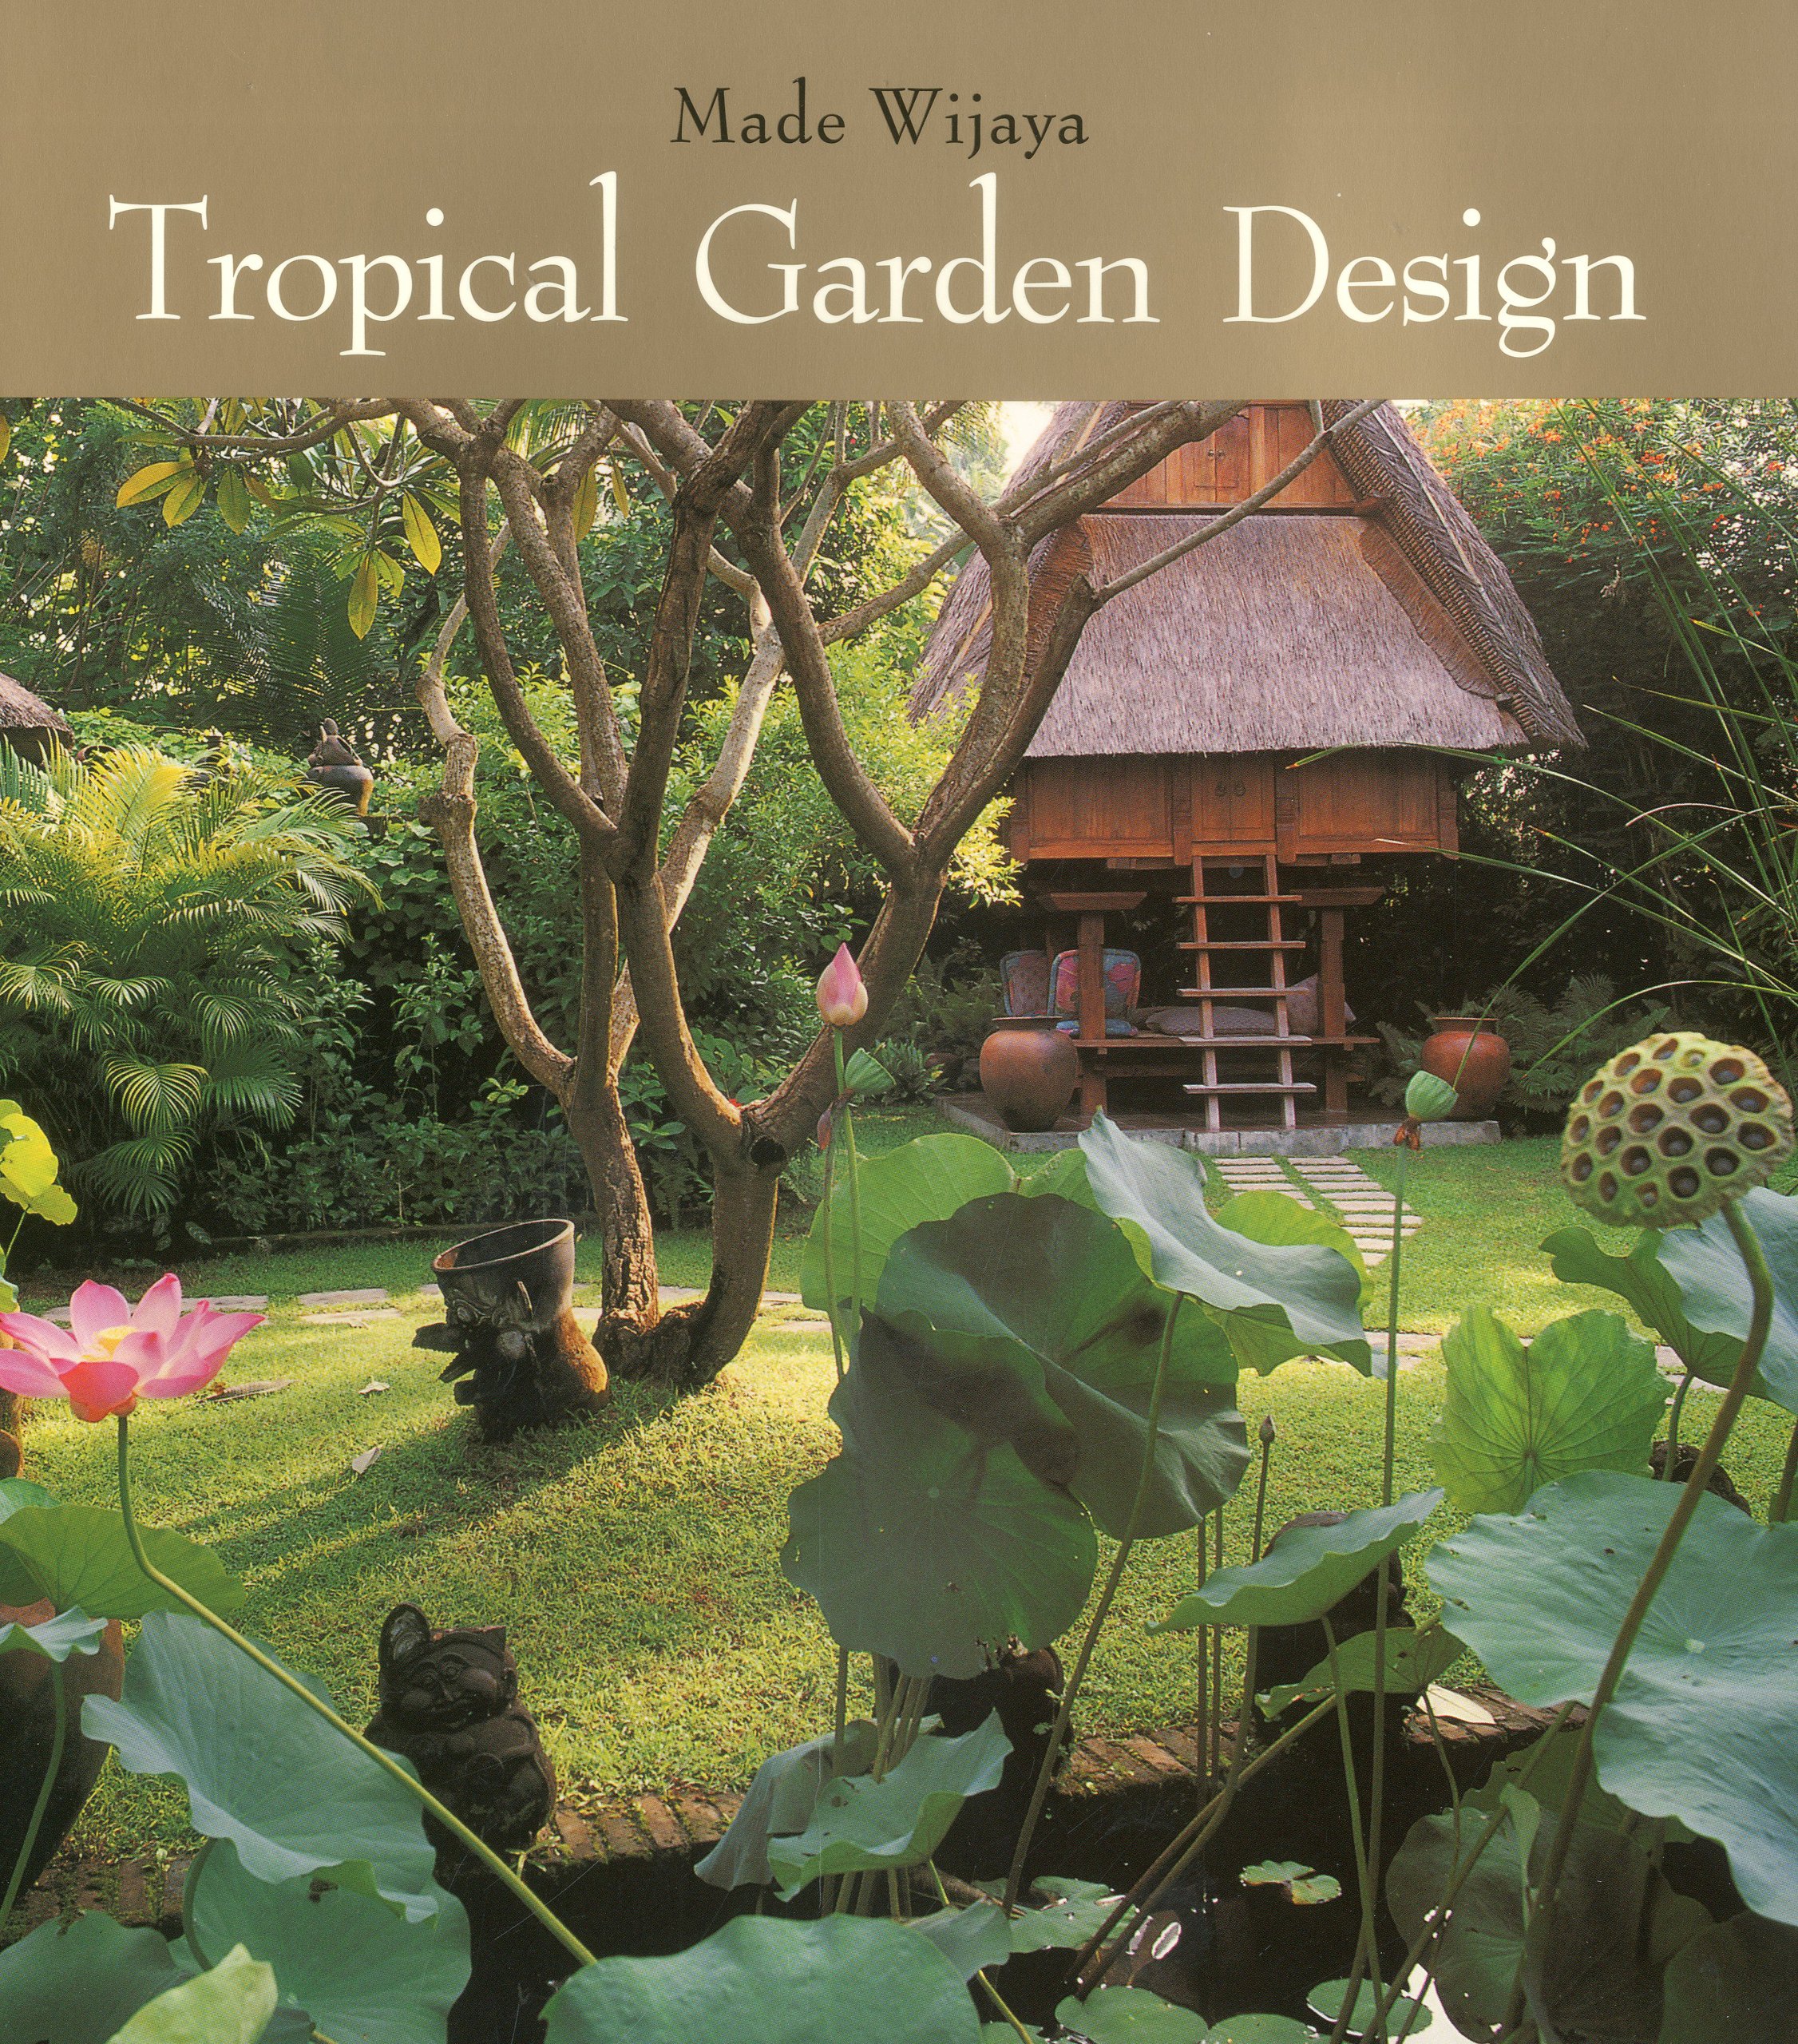 Tropical Garden Design: Made Wijaya: 9789814068918: Amazon.com: Books